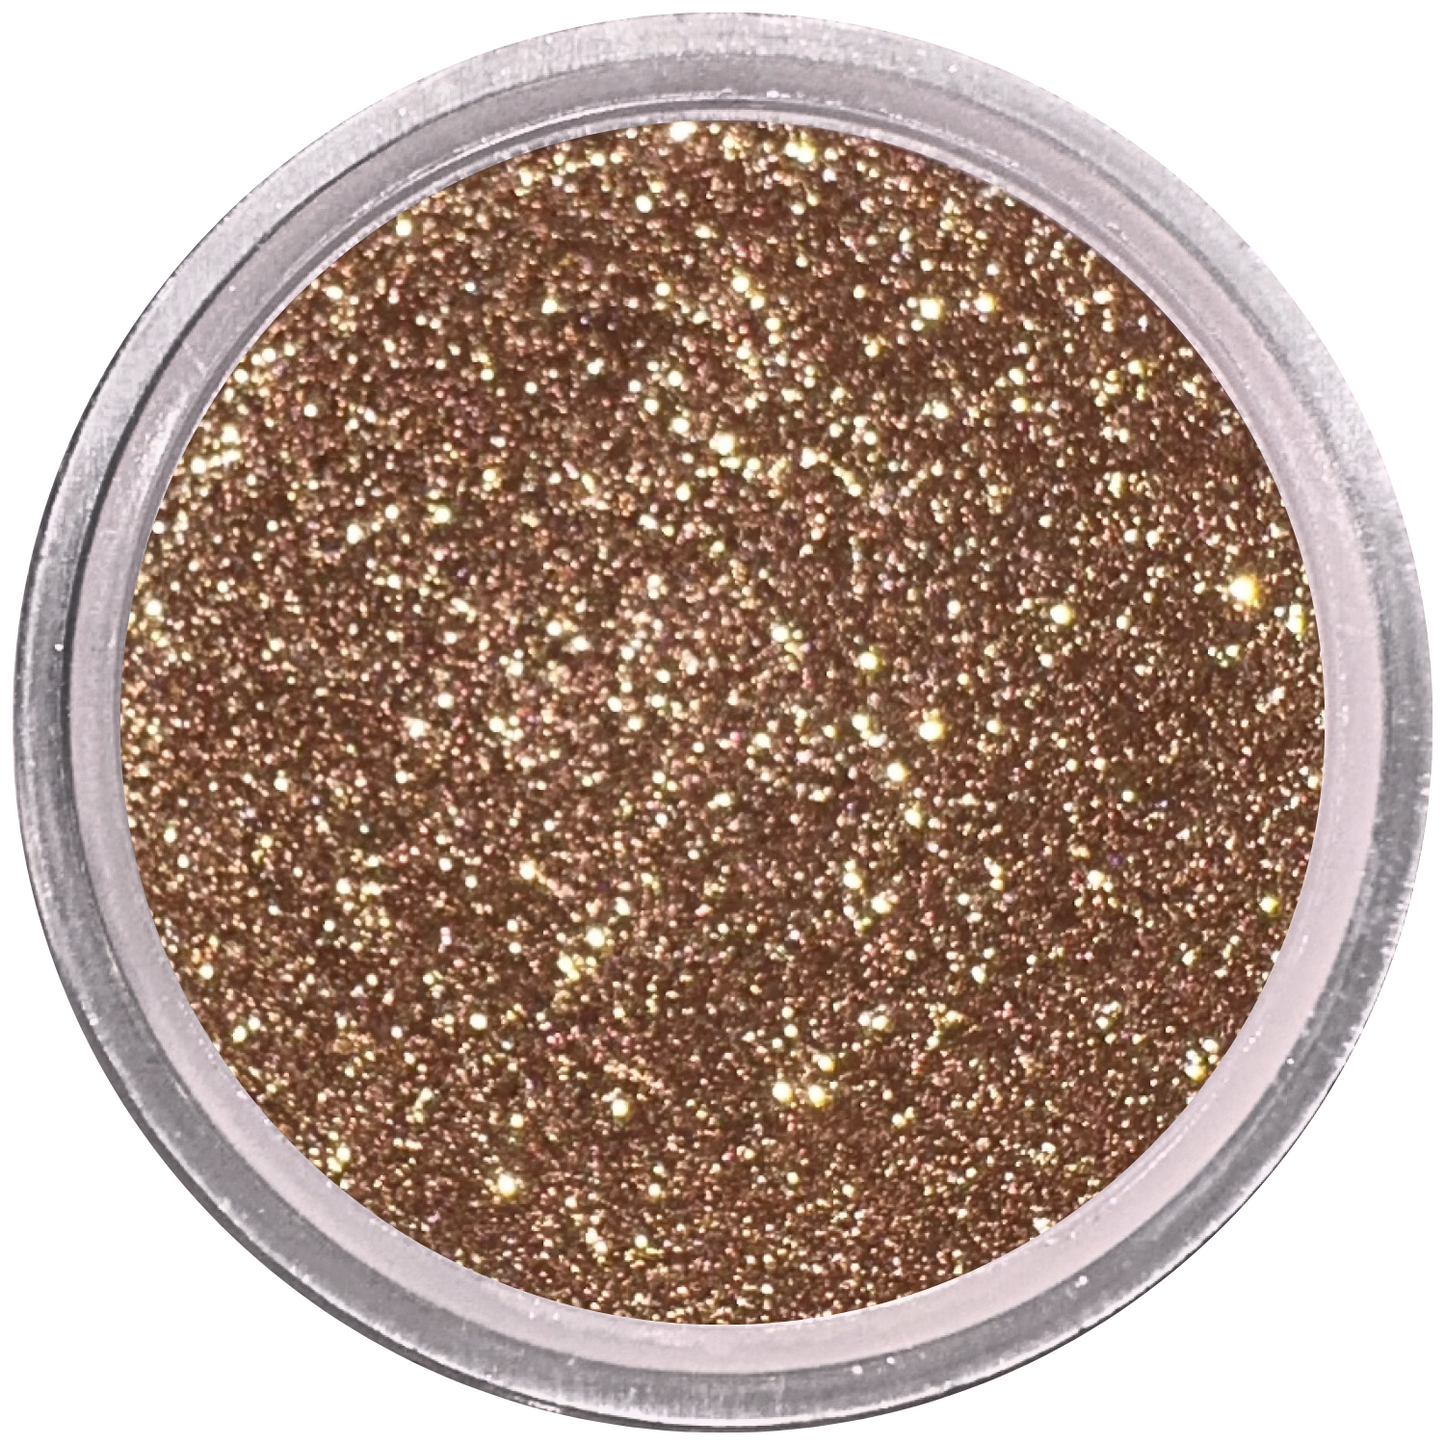 Choclate Gold Loose Powder Mineral Eyeshadow Single 3g